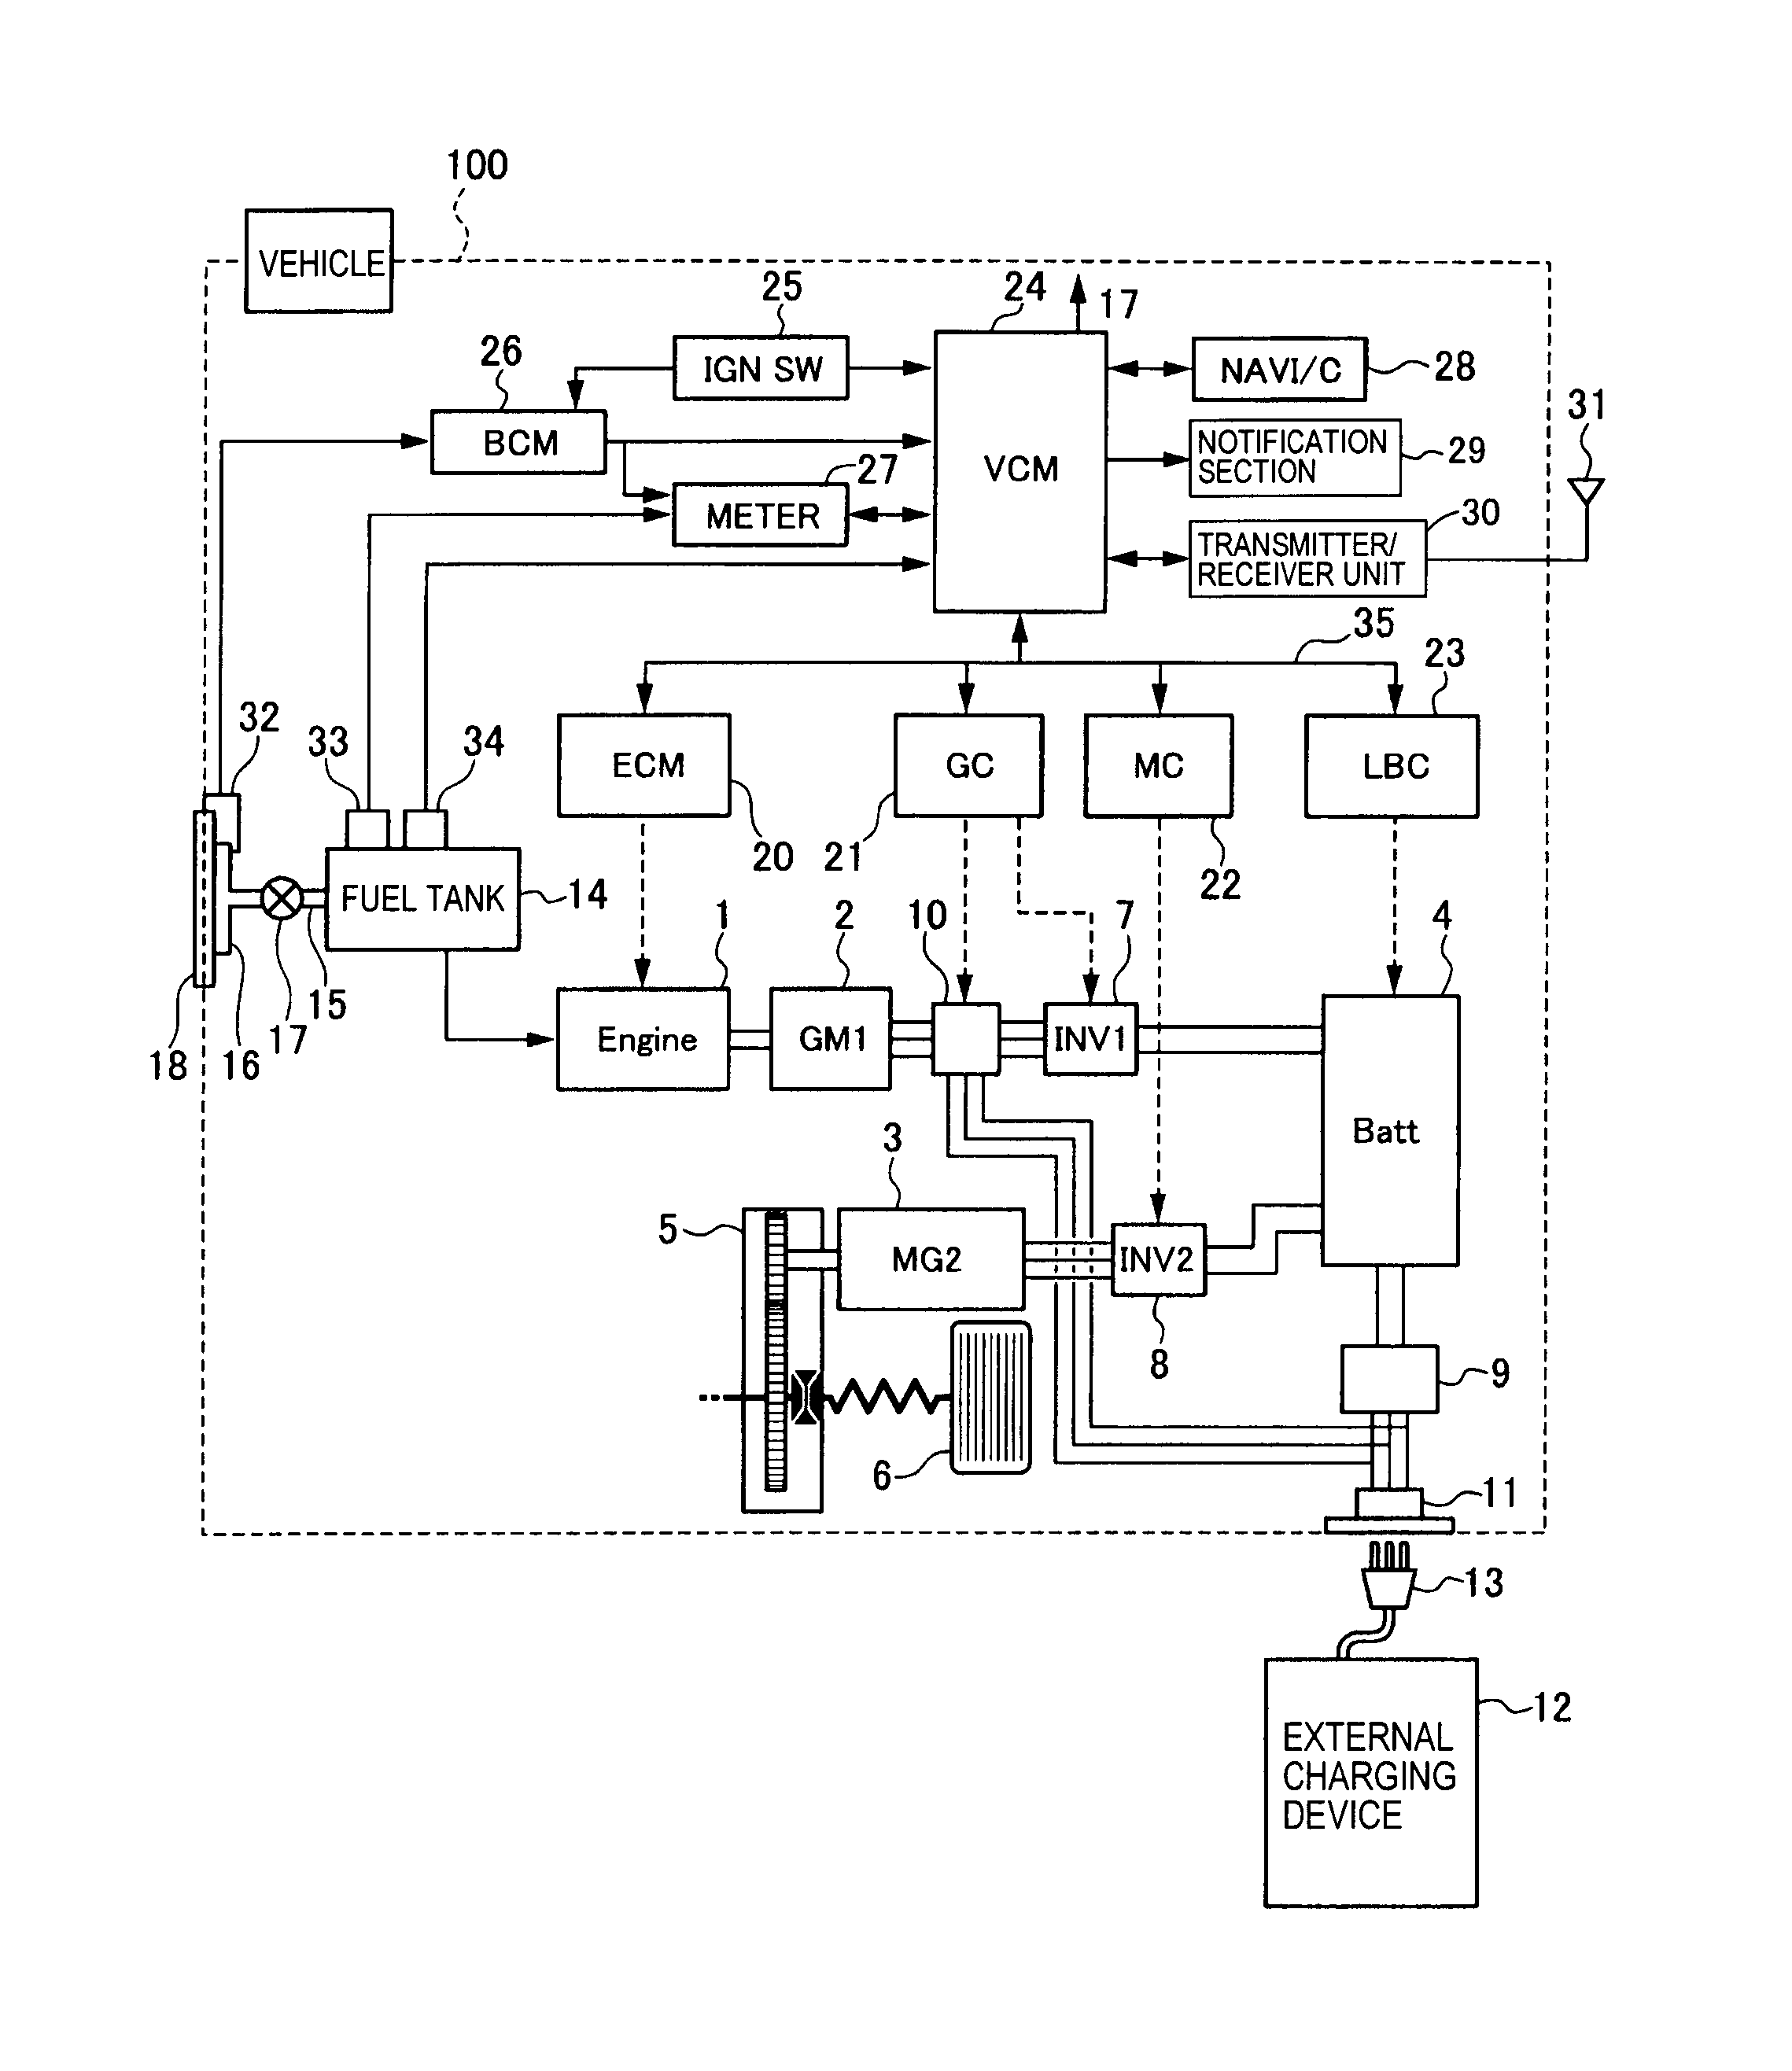 e2eb-012ha wiring diagram